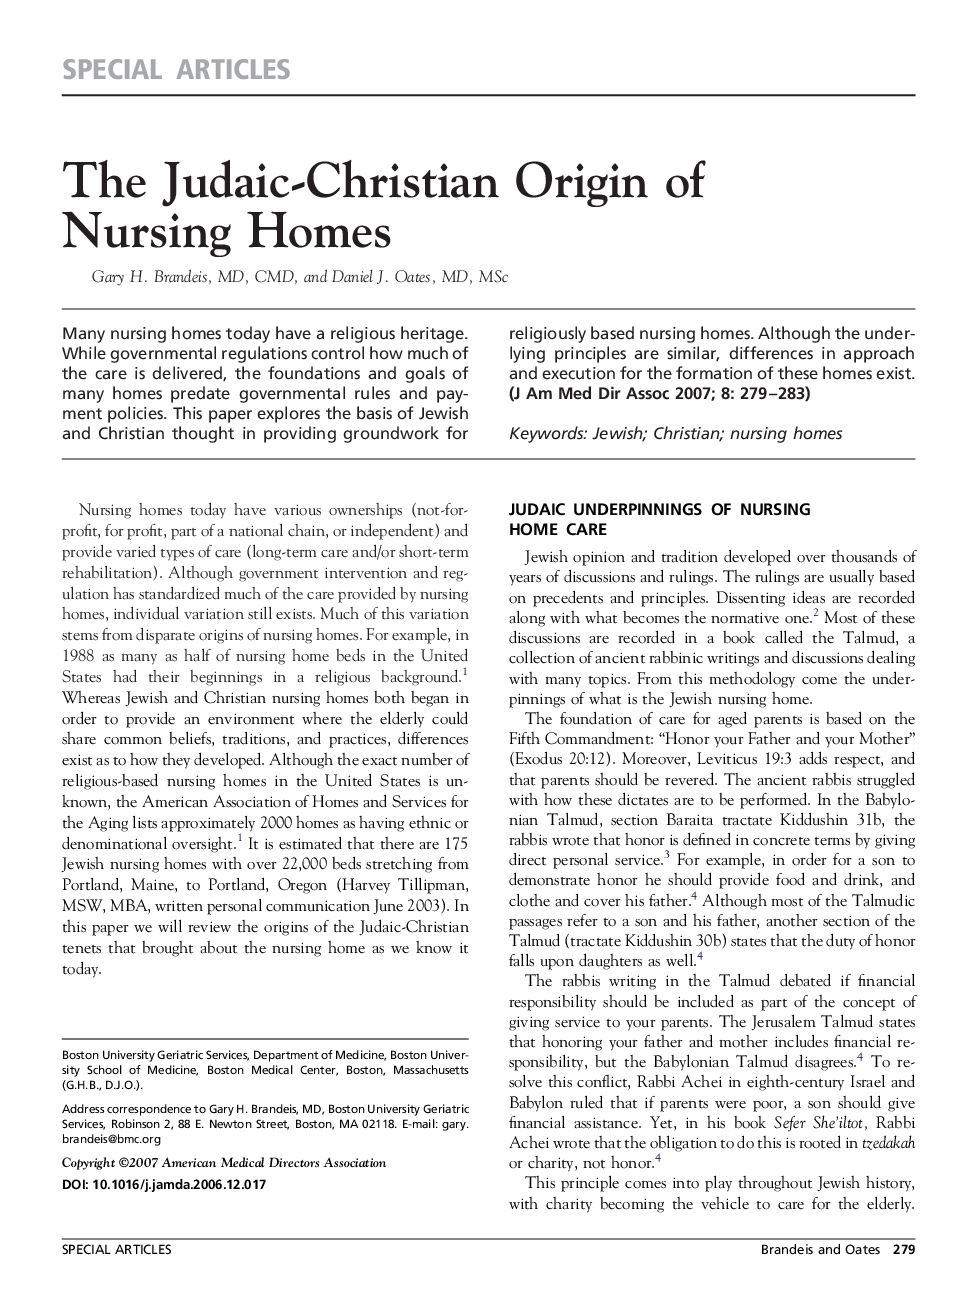 The Judaic-Christian Origin of Nursing Homes